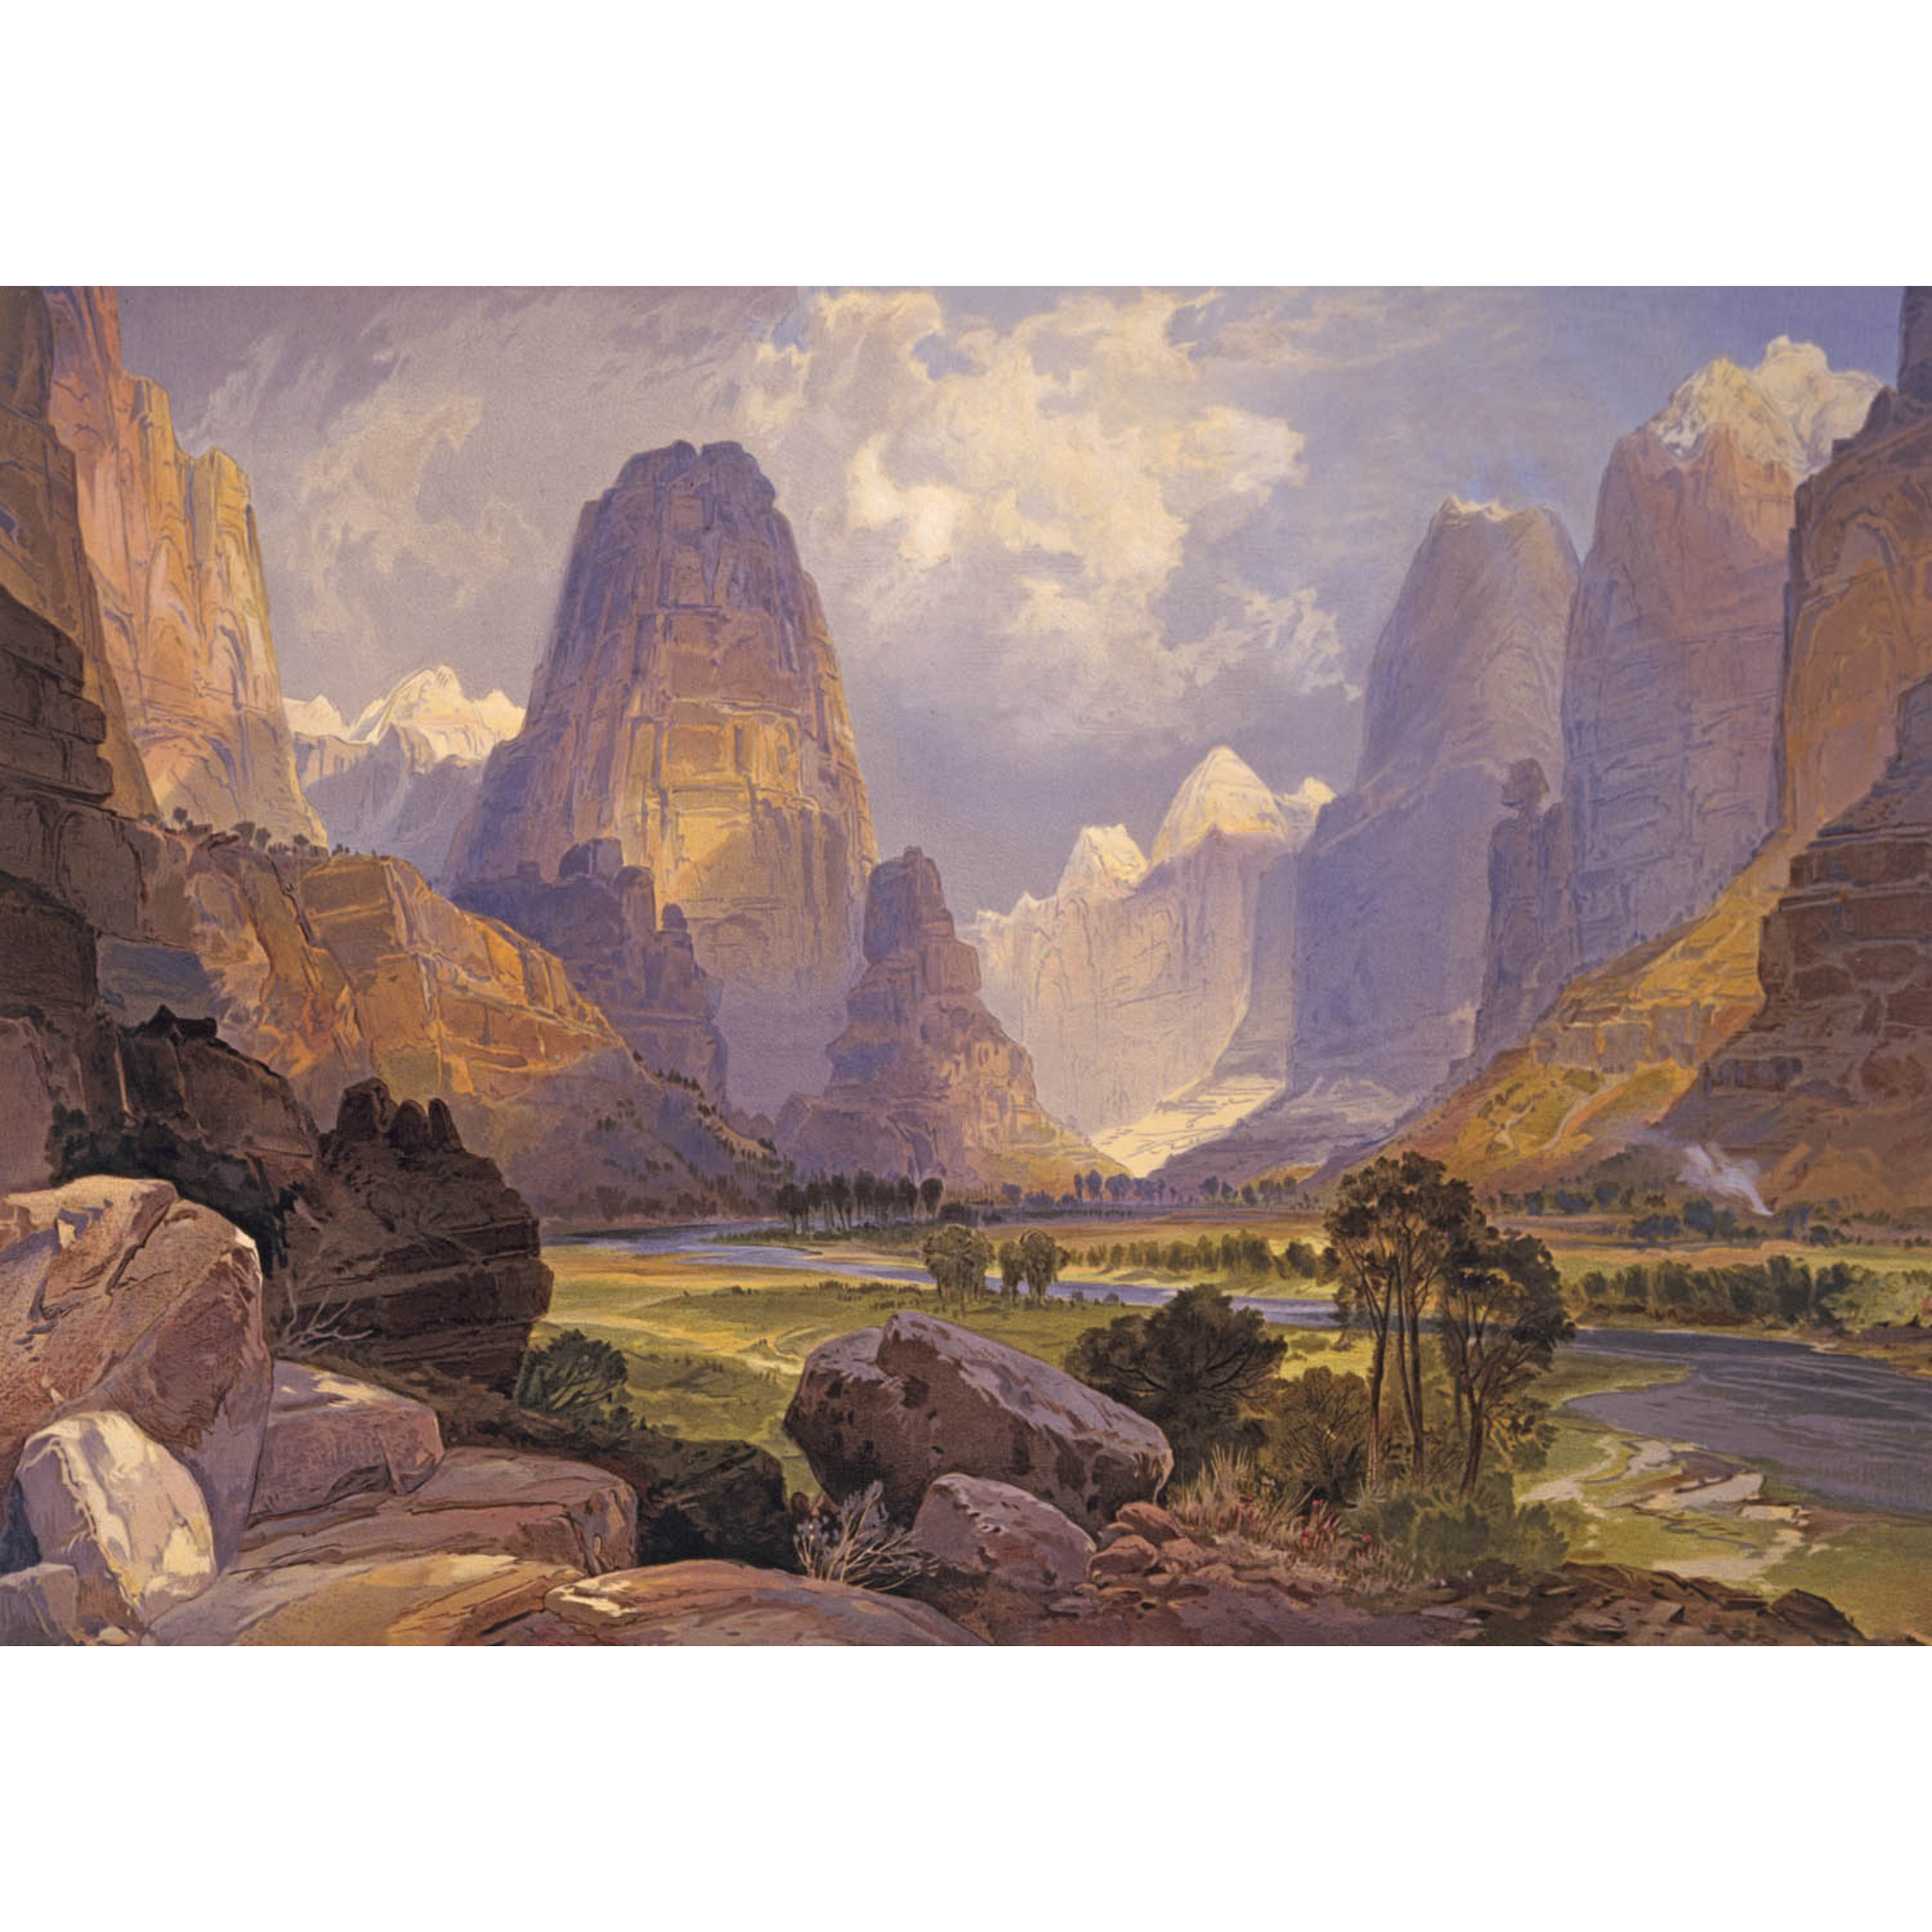 Valley of Bubbling Waters Southern Utah (Zion) - 1874-75 Thomas Moran Watercolor